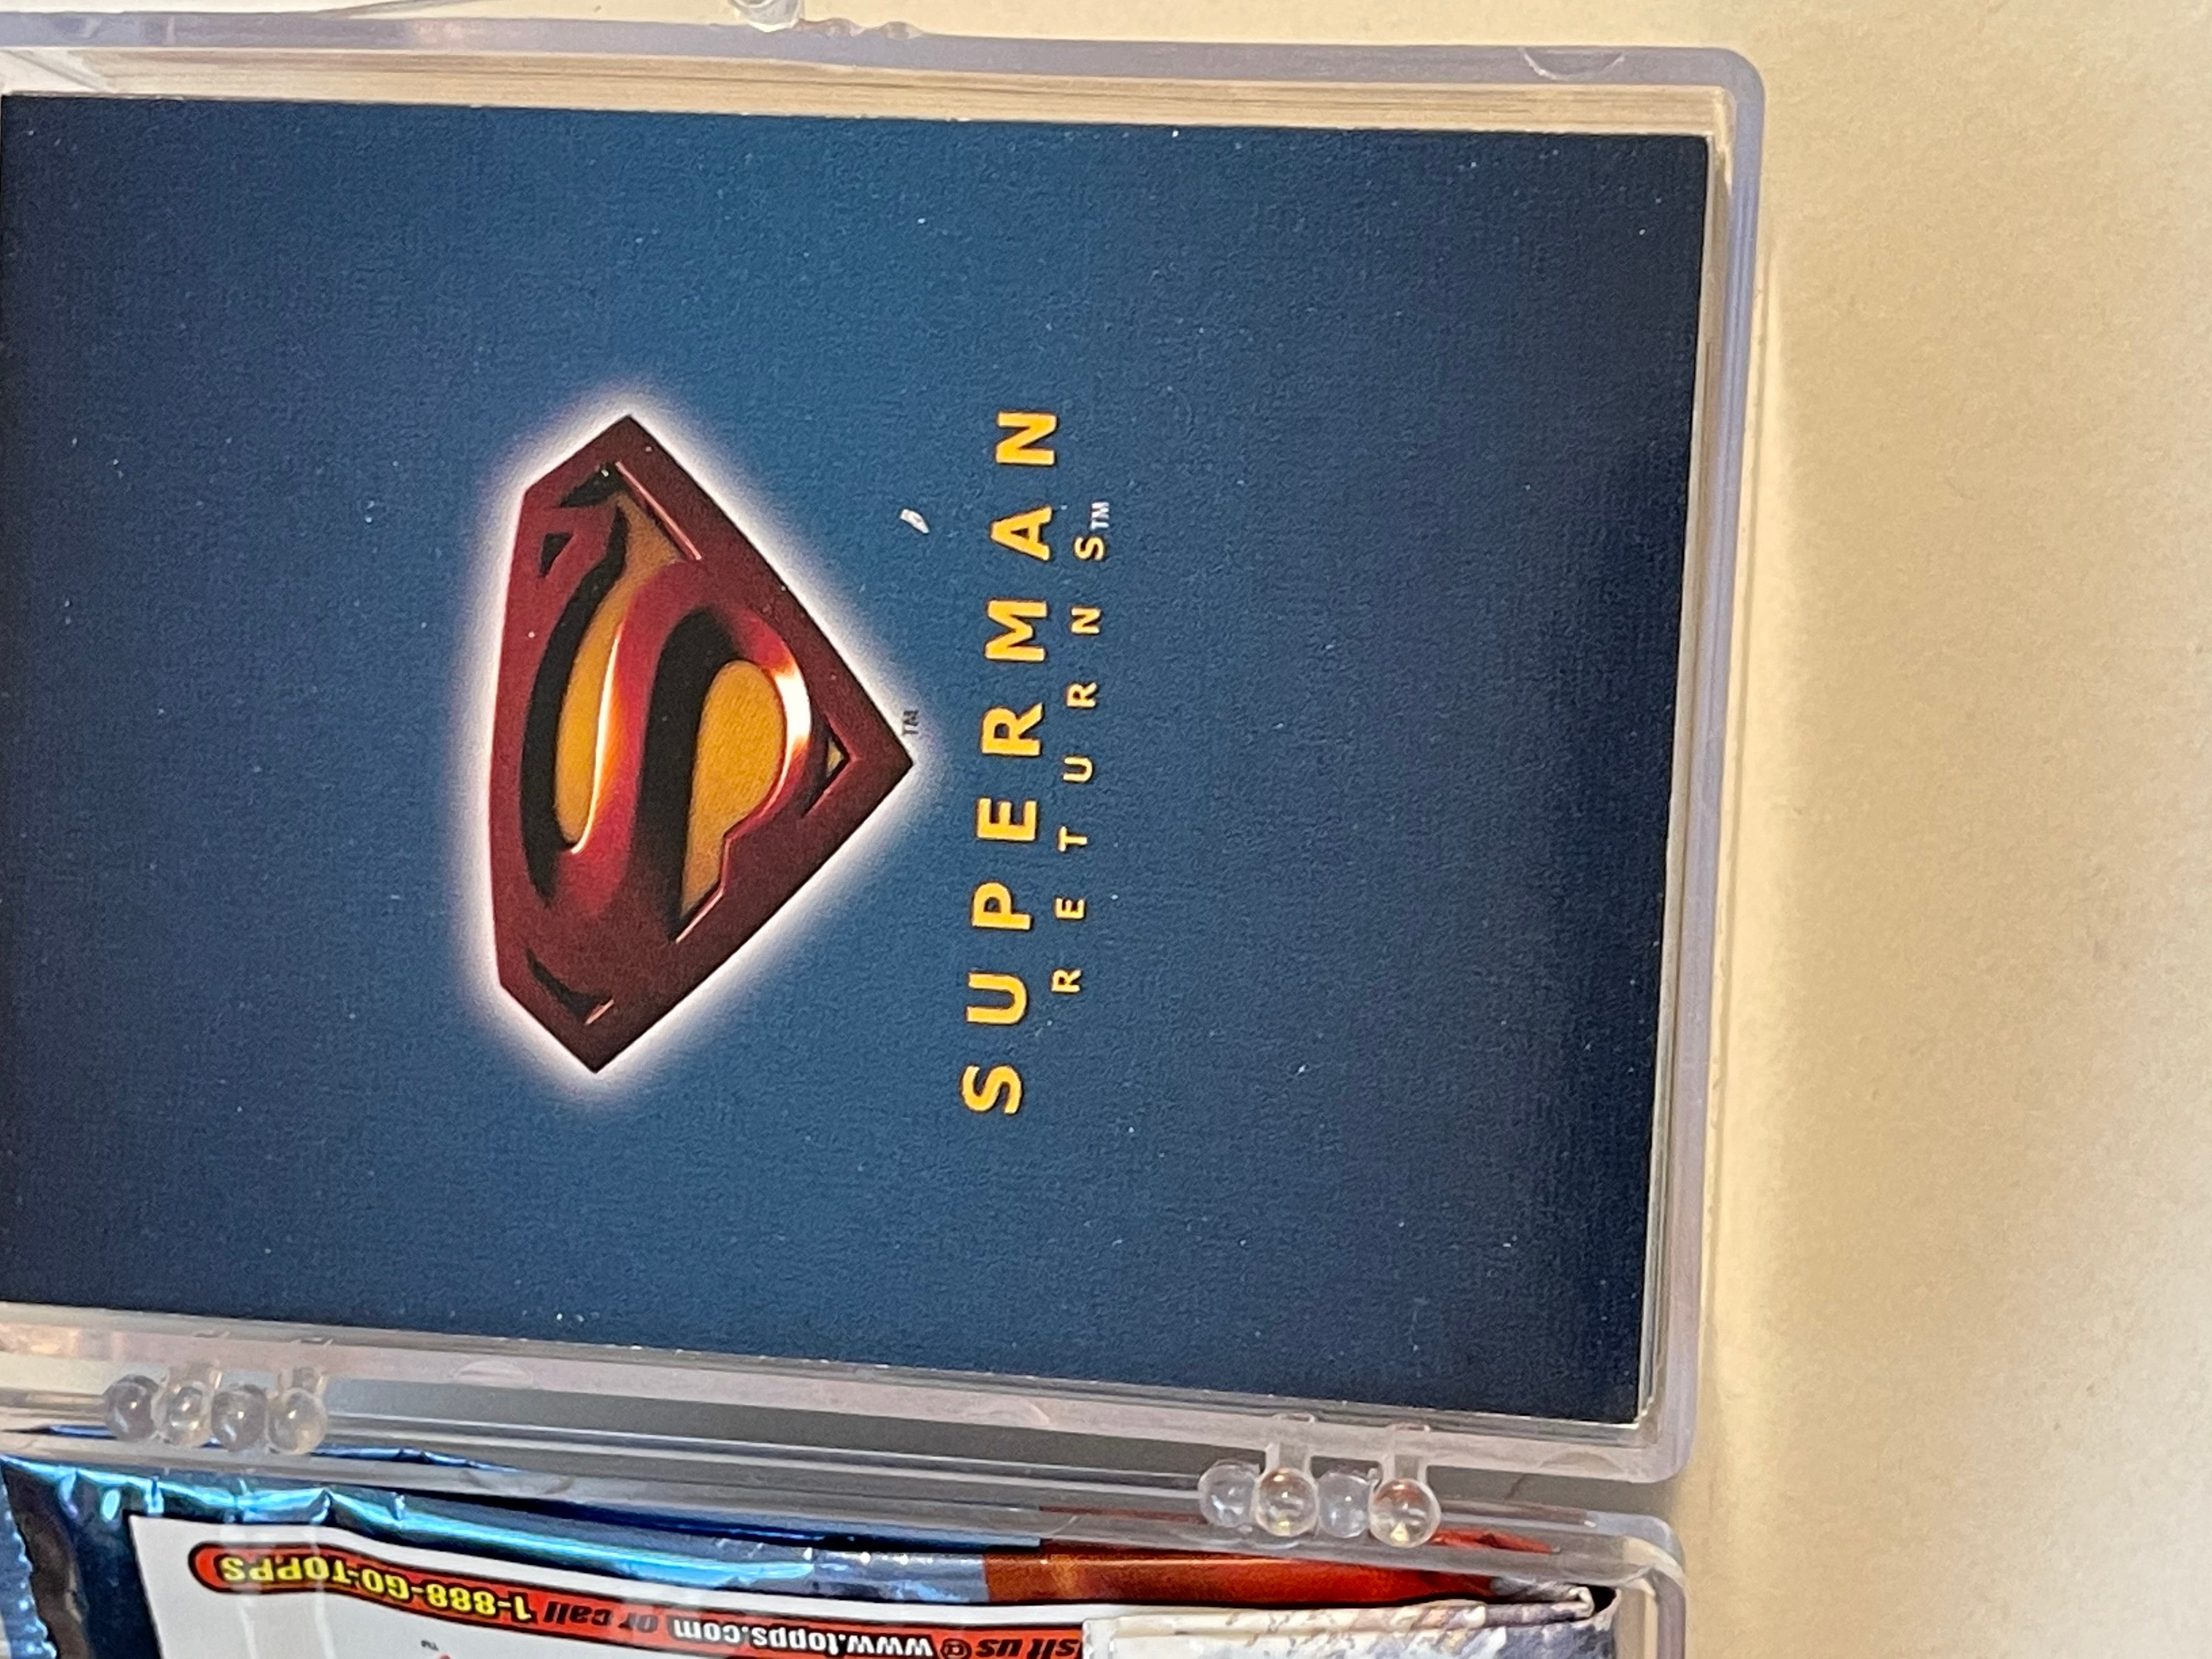 Superman Returns movie cards set 2006